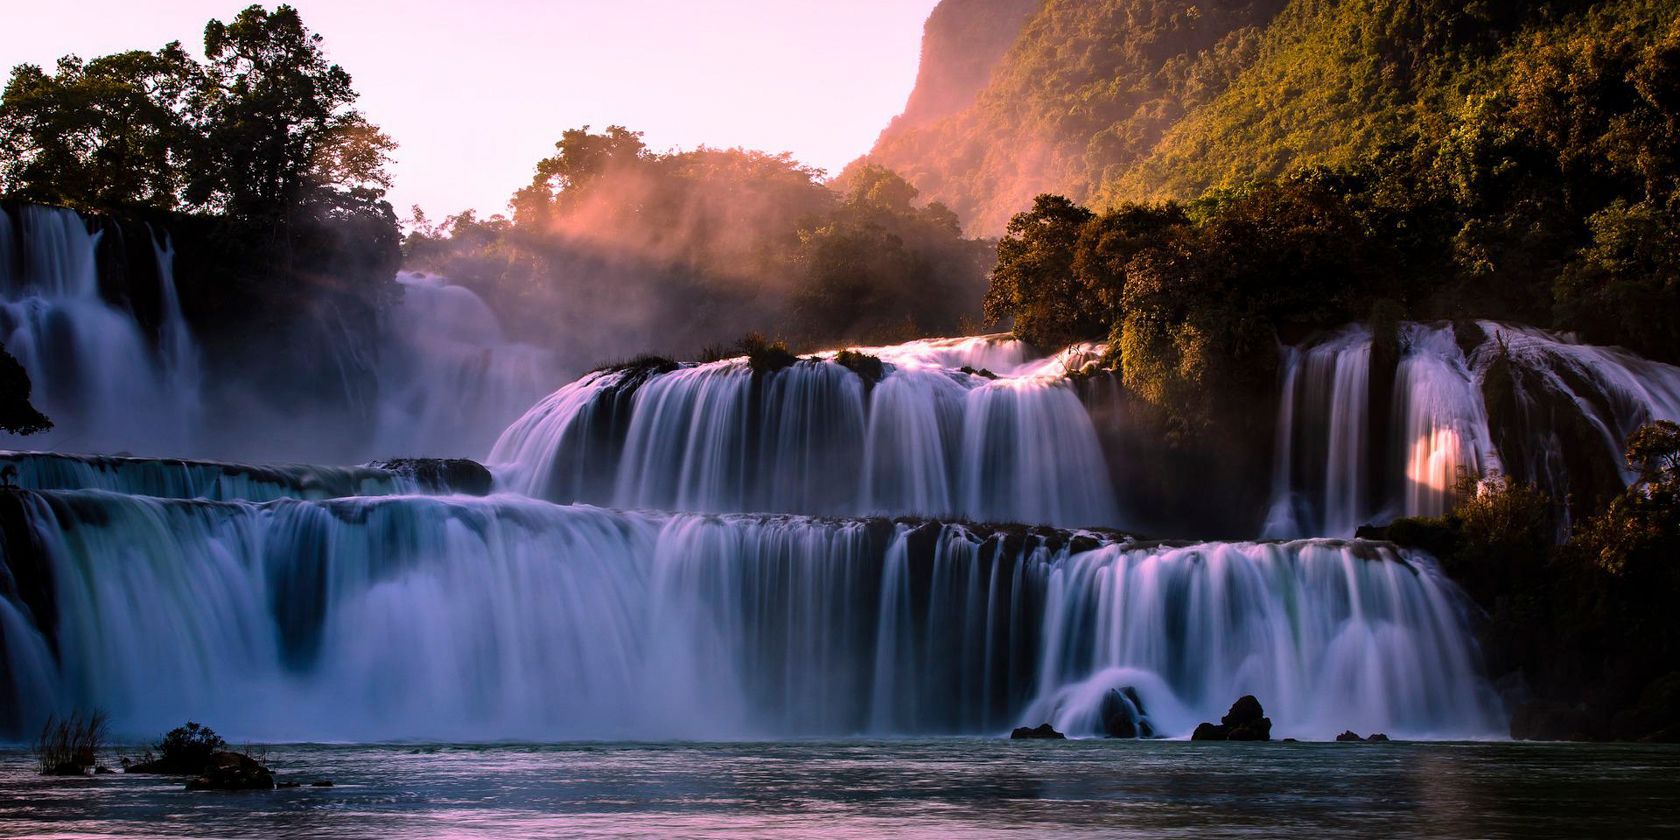 image showing waterfalls in gentle sunlight